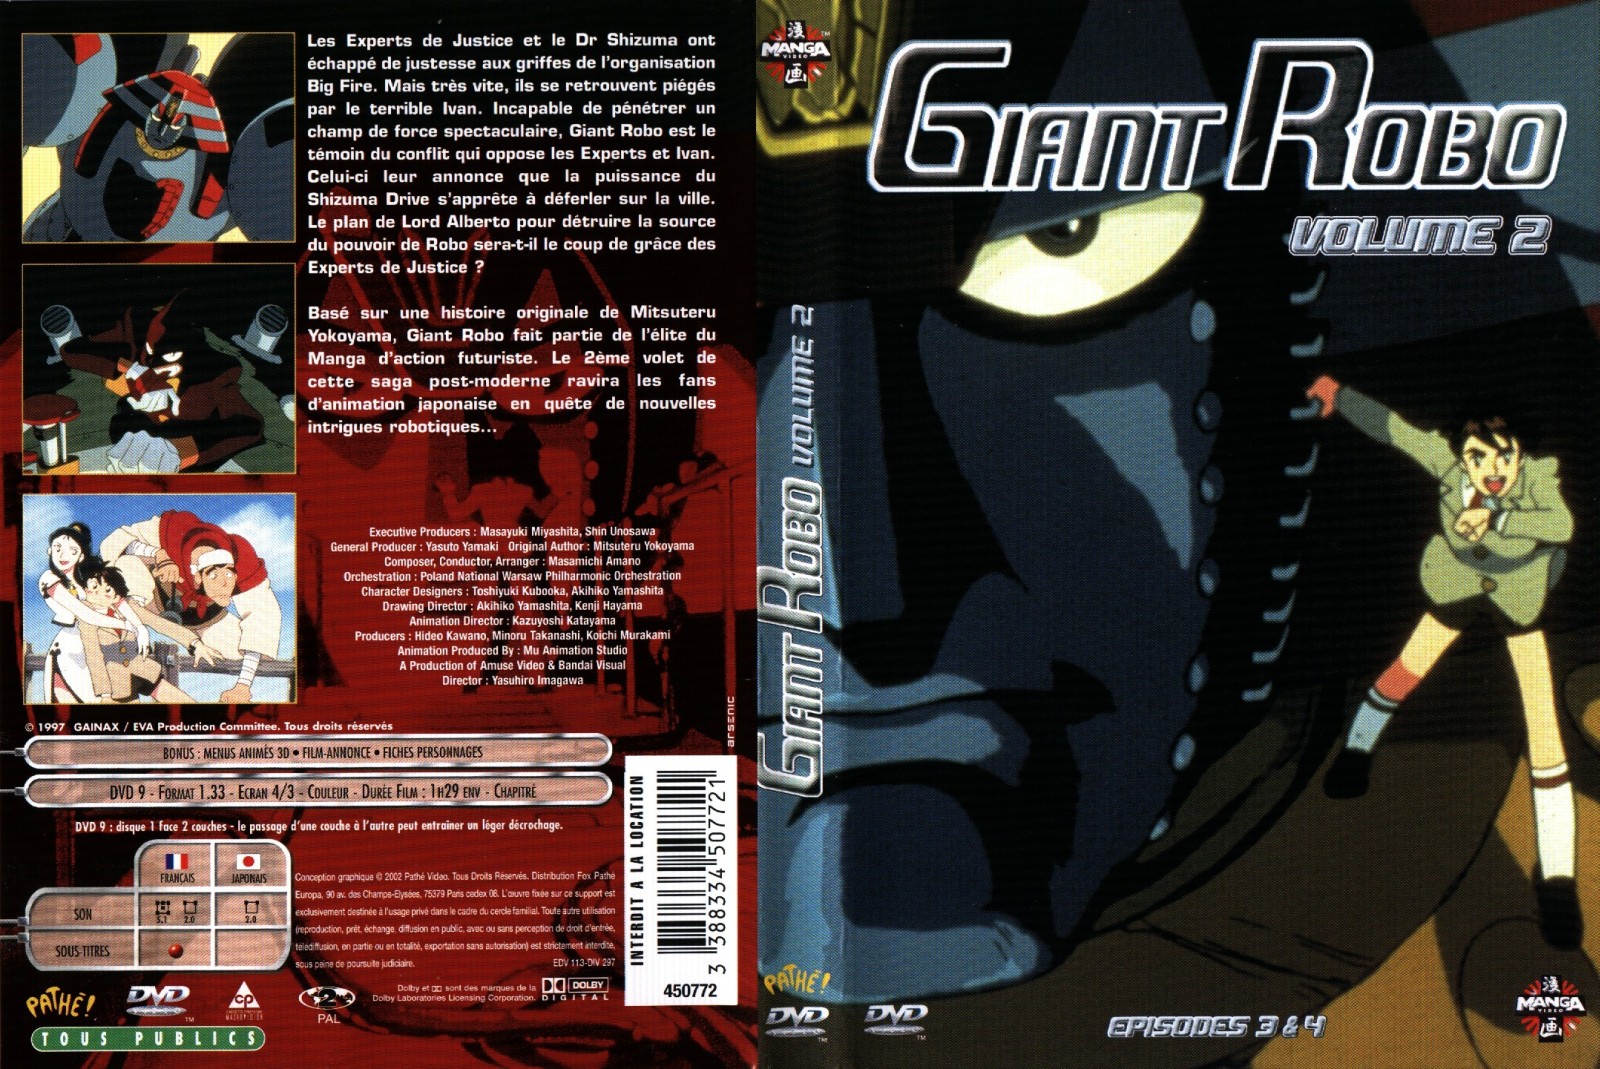 Jaquette DVD Giant robo vol2